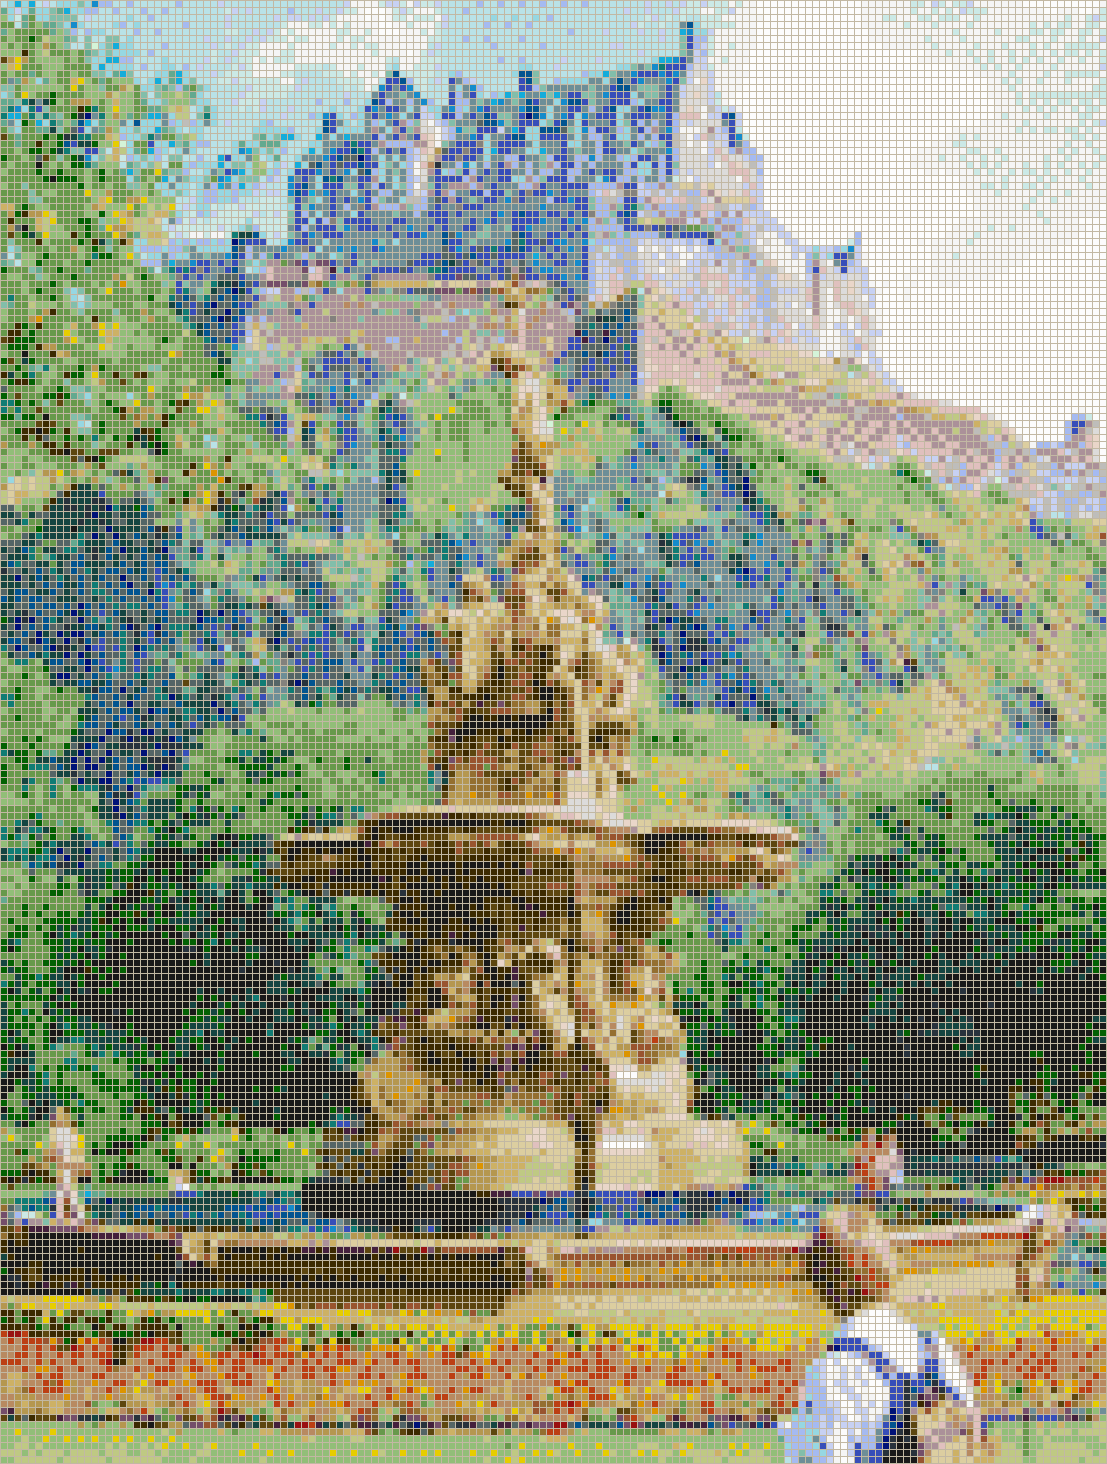 Edinburgh Castle and Fountain - Mosaic Tile Picture Art